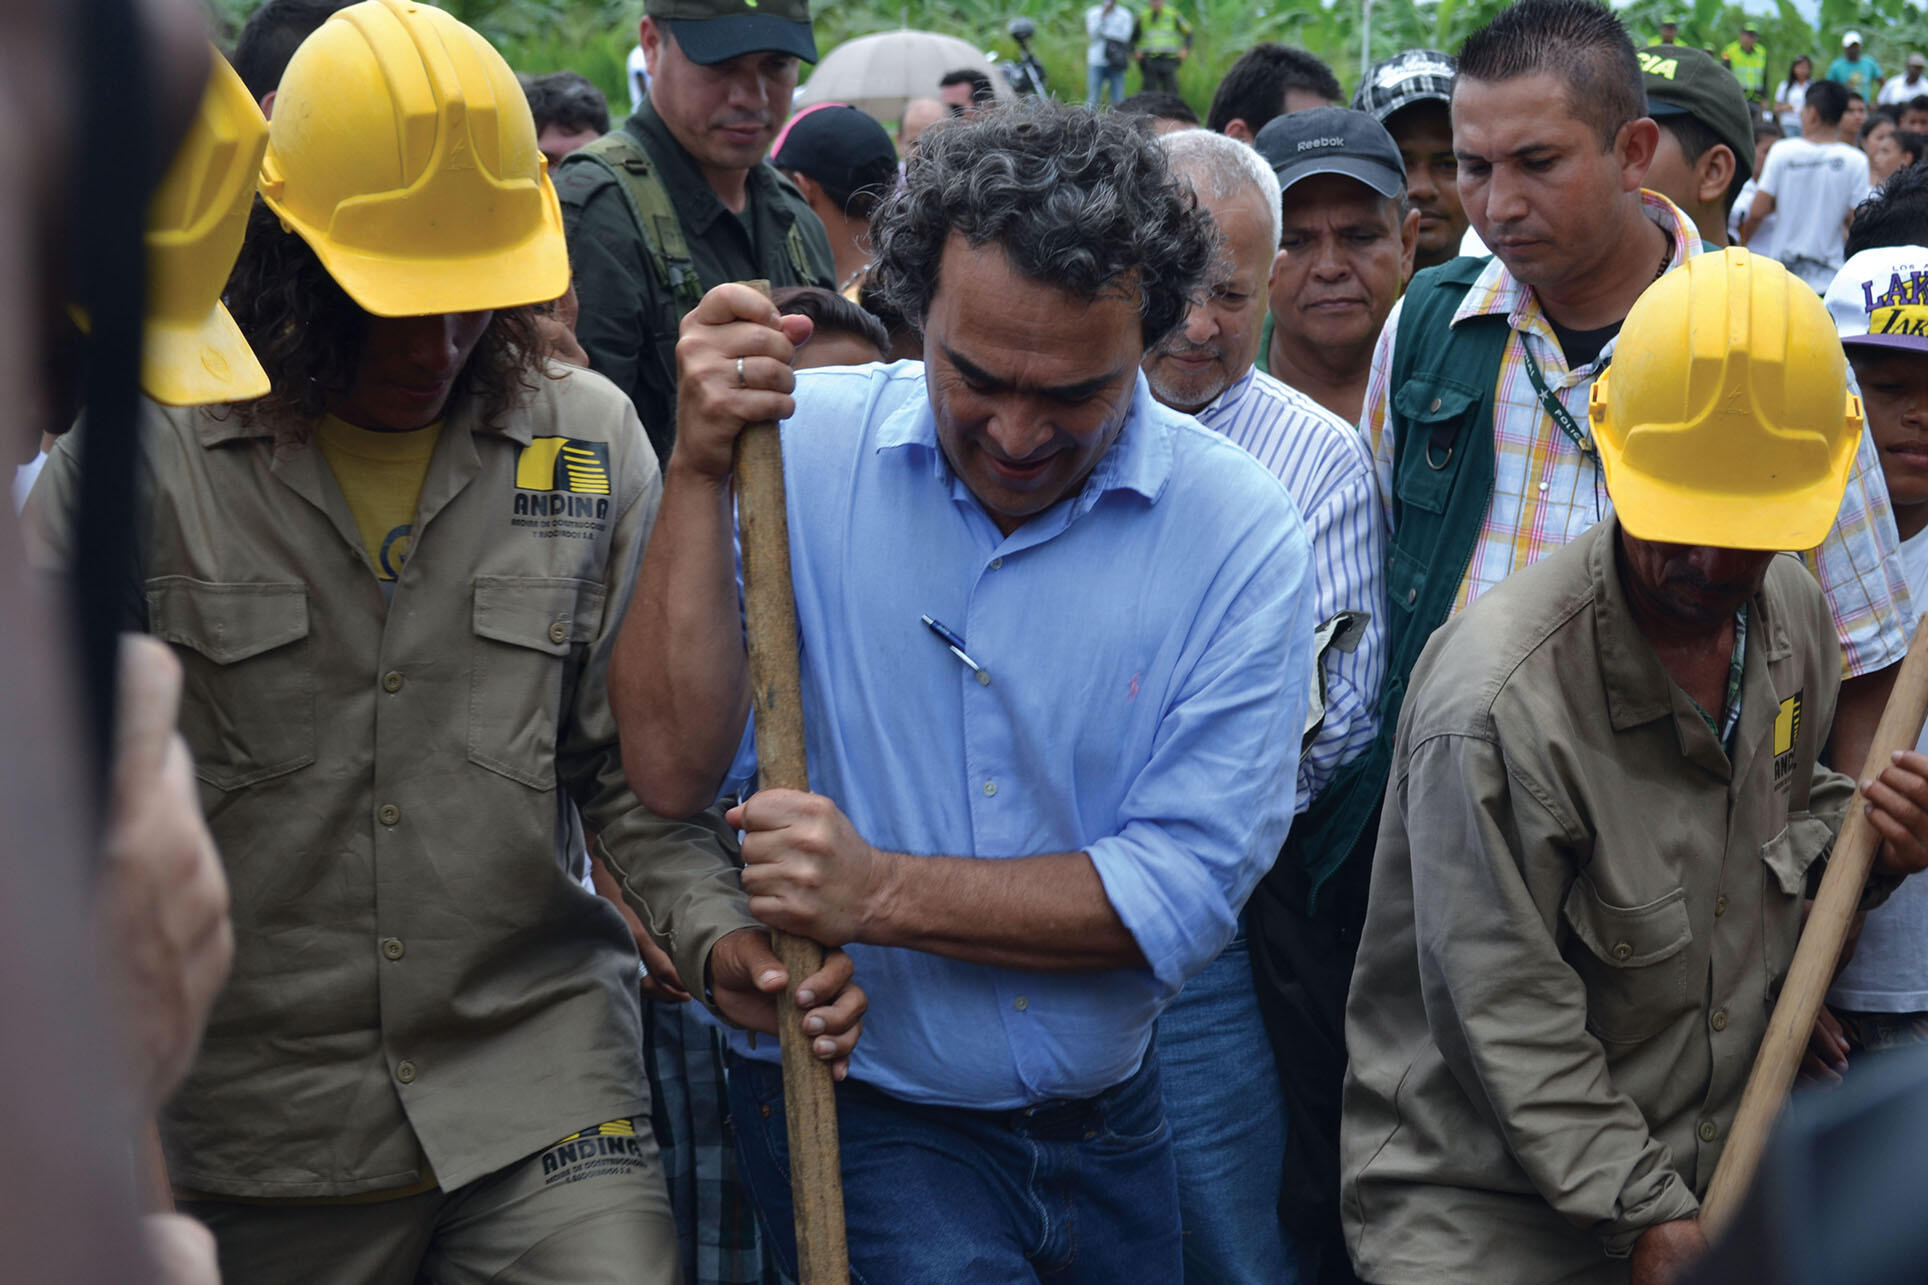 Sergio Fajardo (center, with other workers) uses a shovel to help break ground for a new university building in Antioquia. (Photo courtesy of Gobernador de Antioquia.)